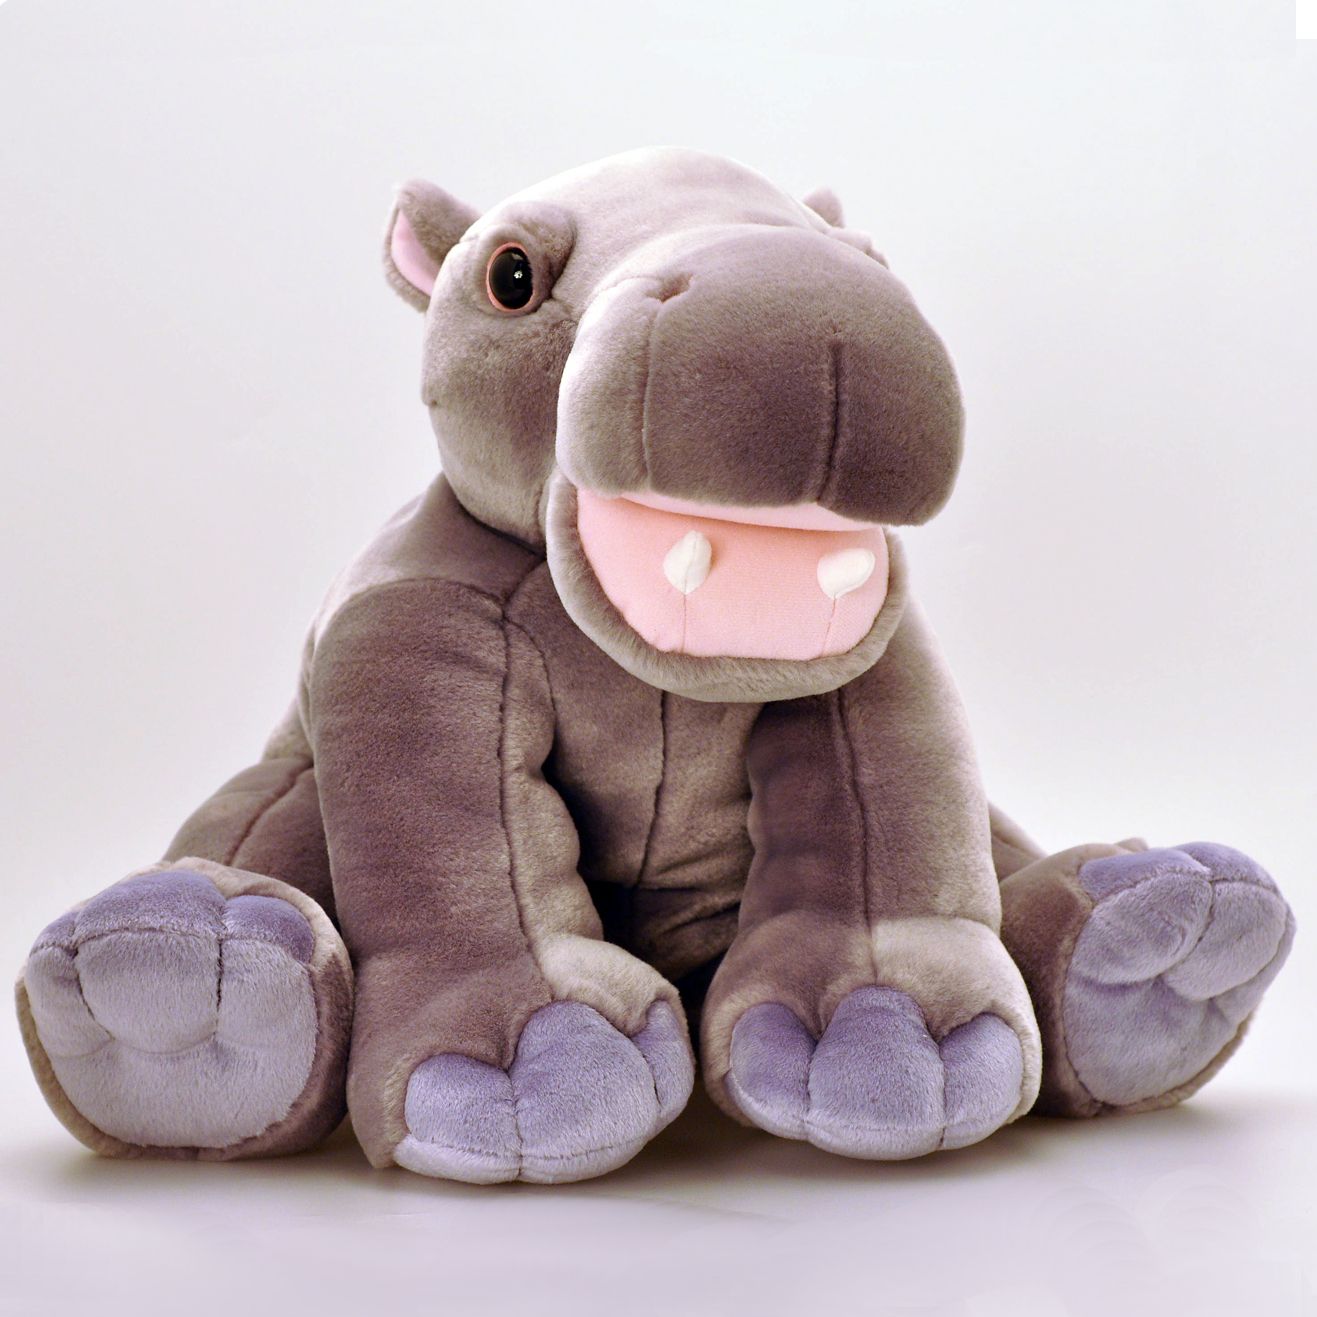 Hippo Plush ToysAll ProductsDisney Plush Toy Manufacture